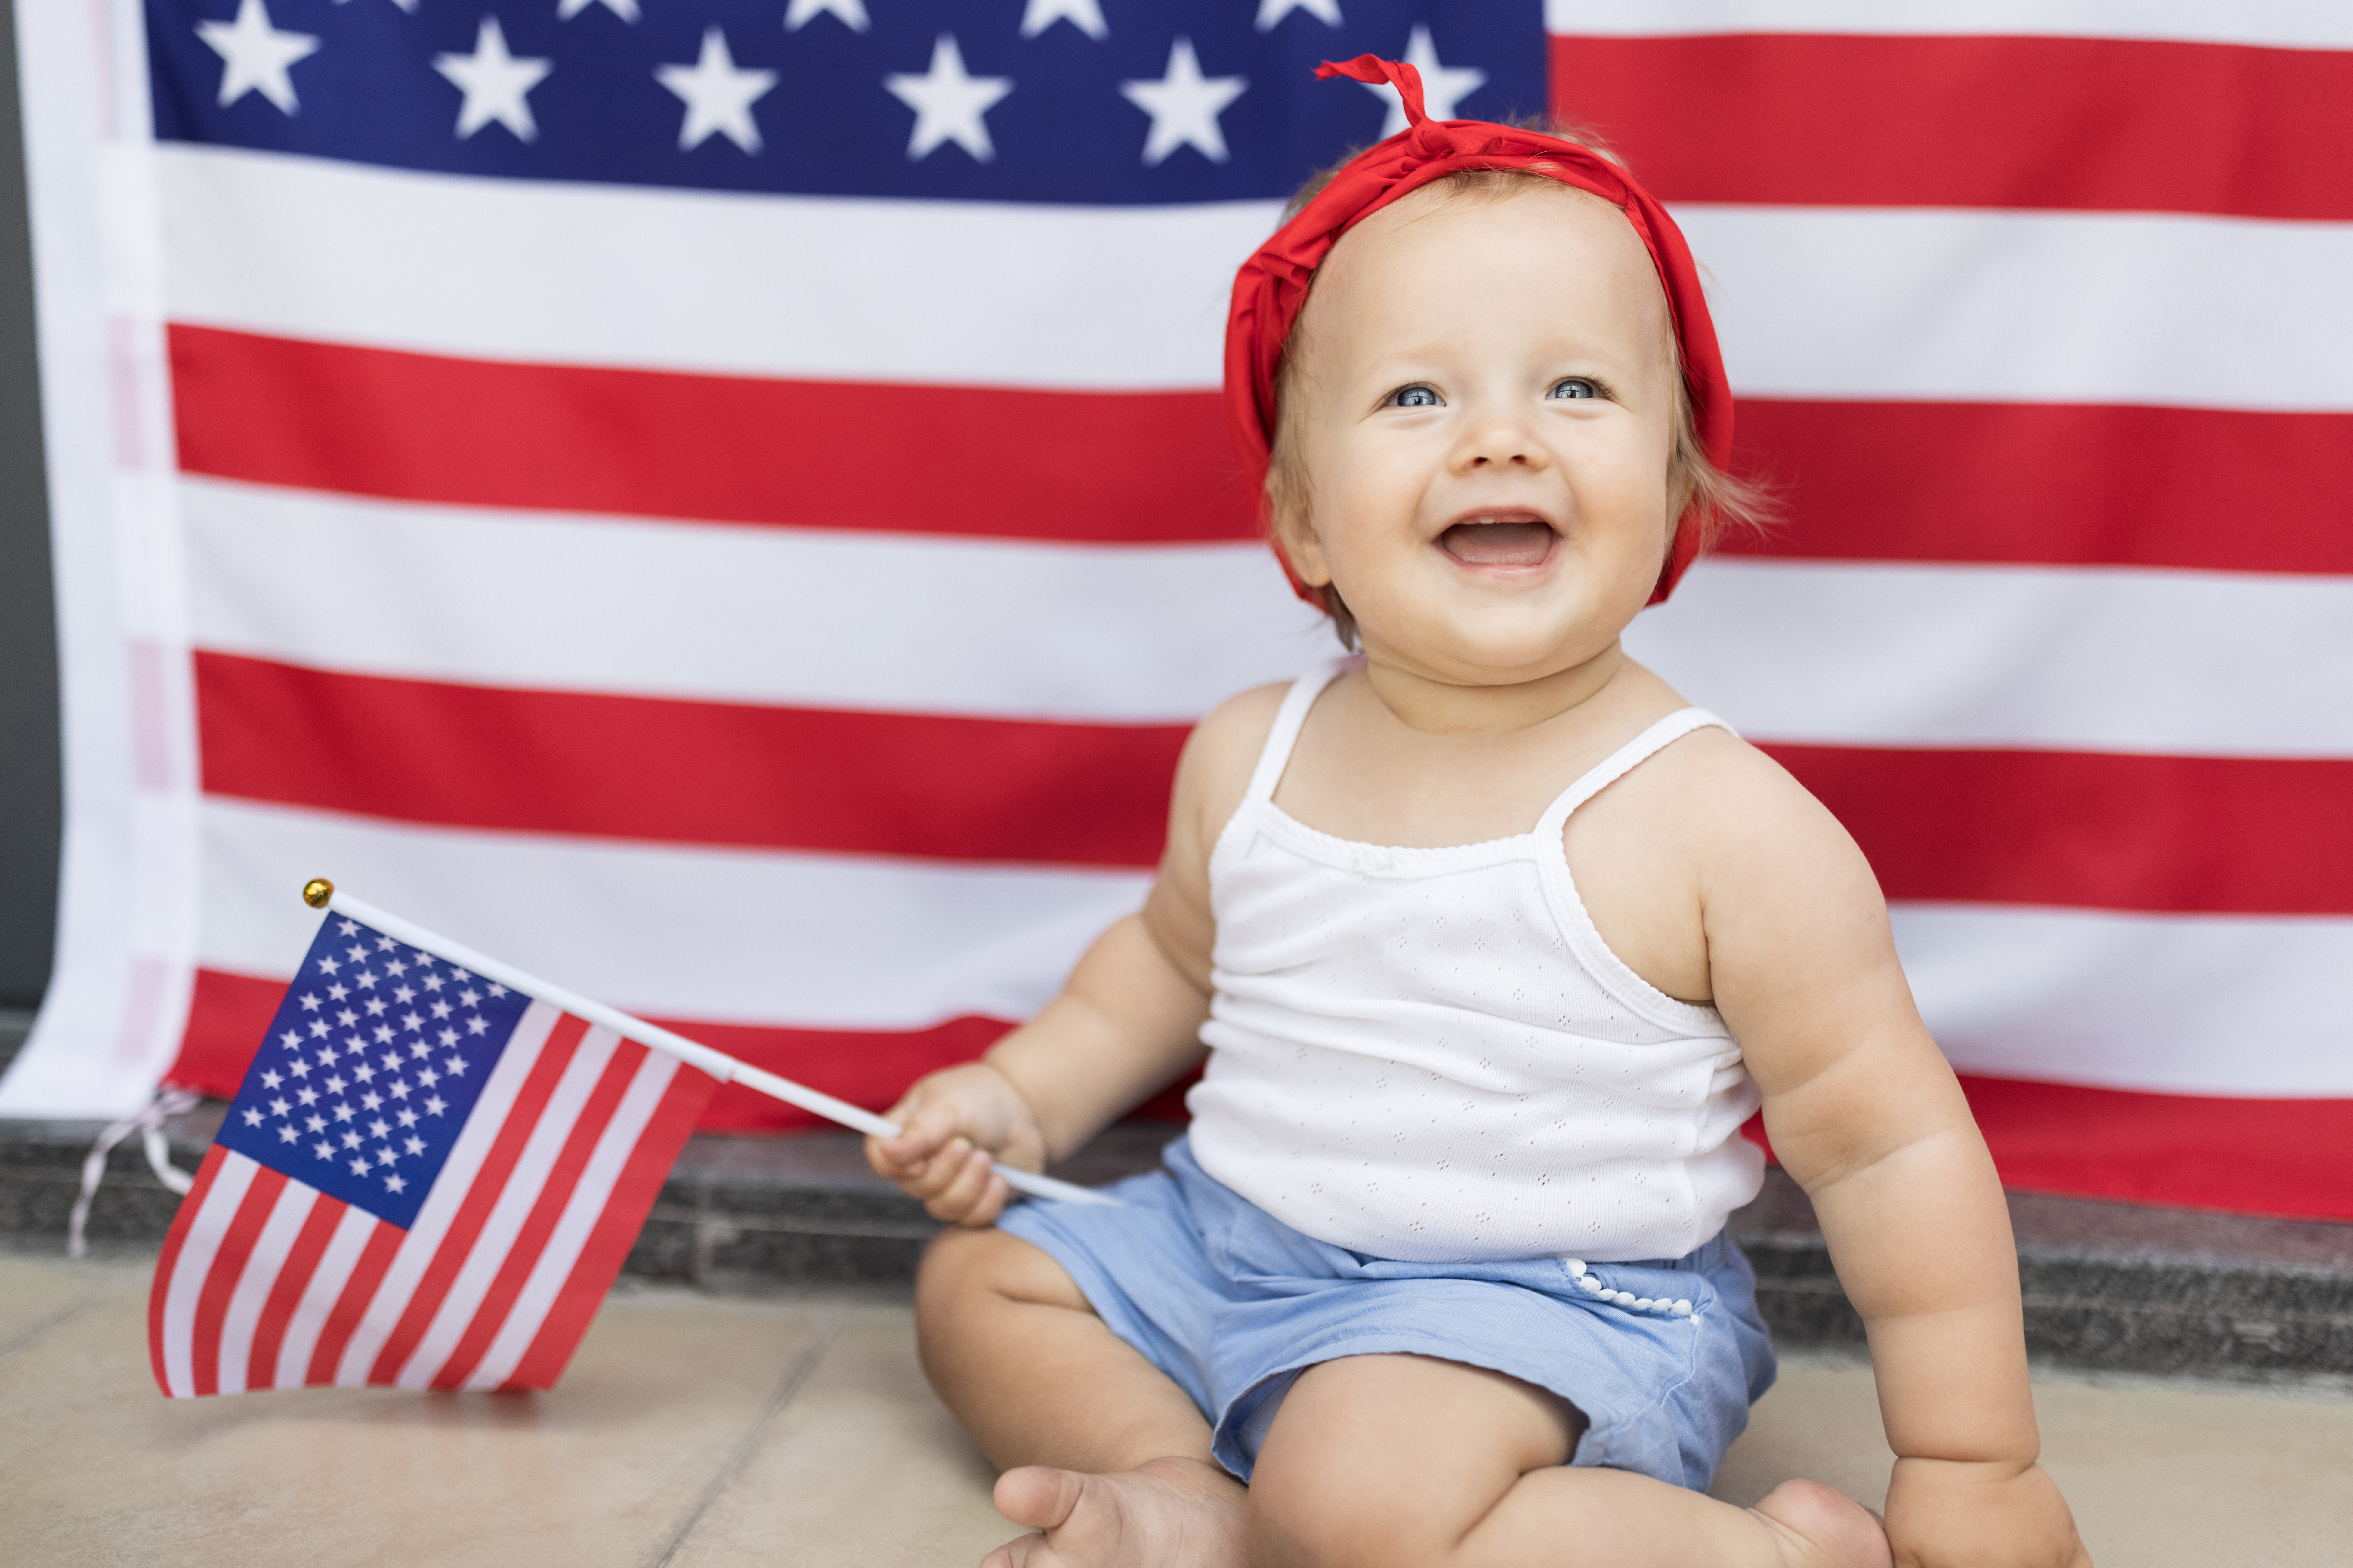 The baby born in America